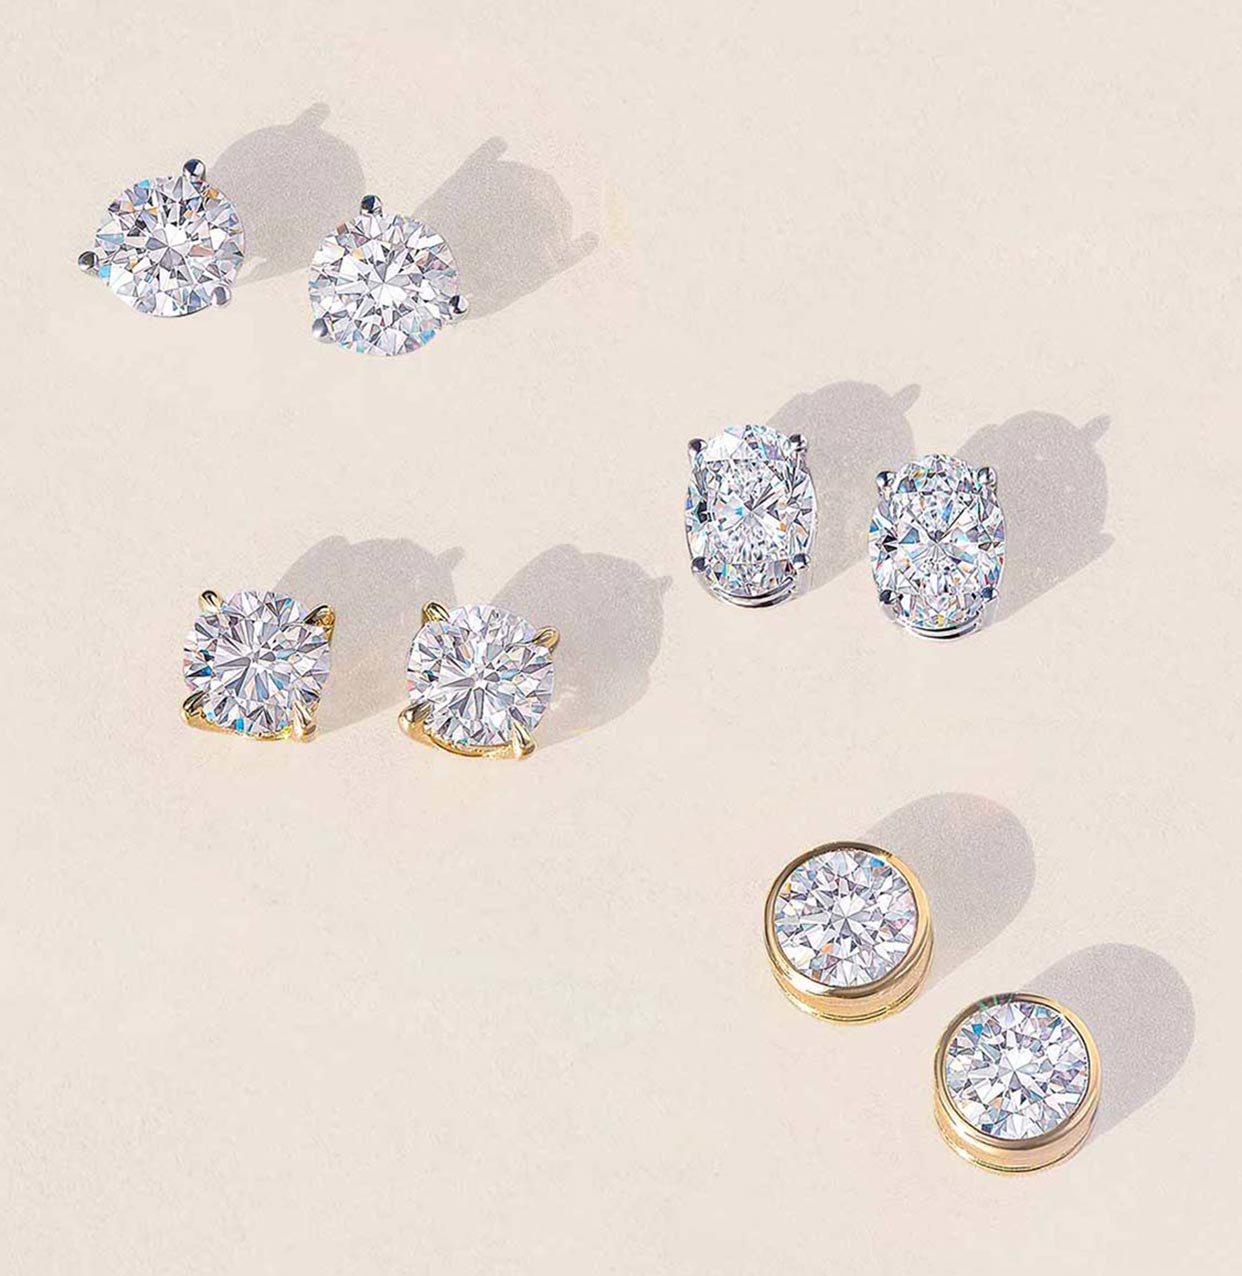 Four pairs of CYO diamond earrings